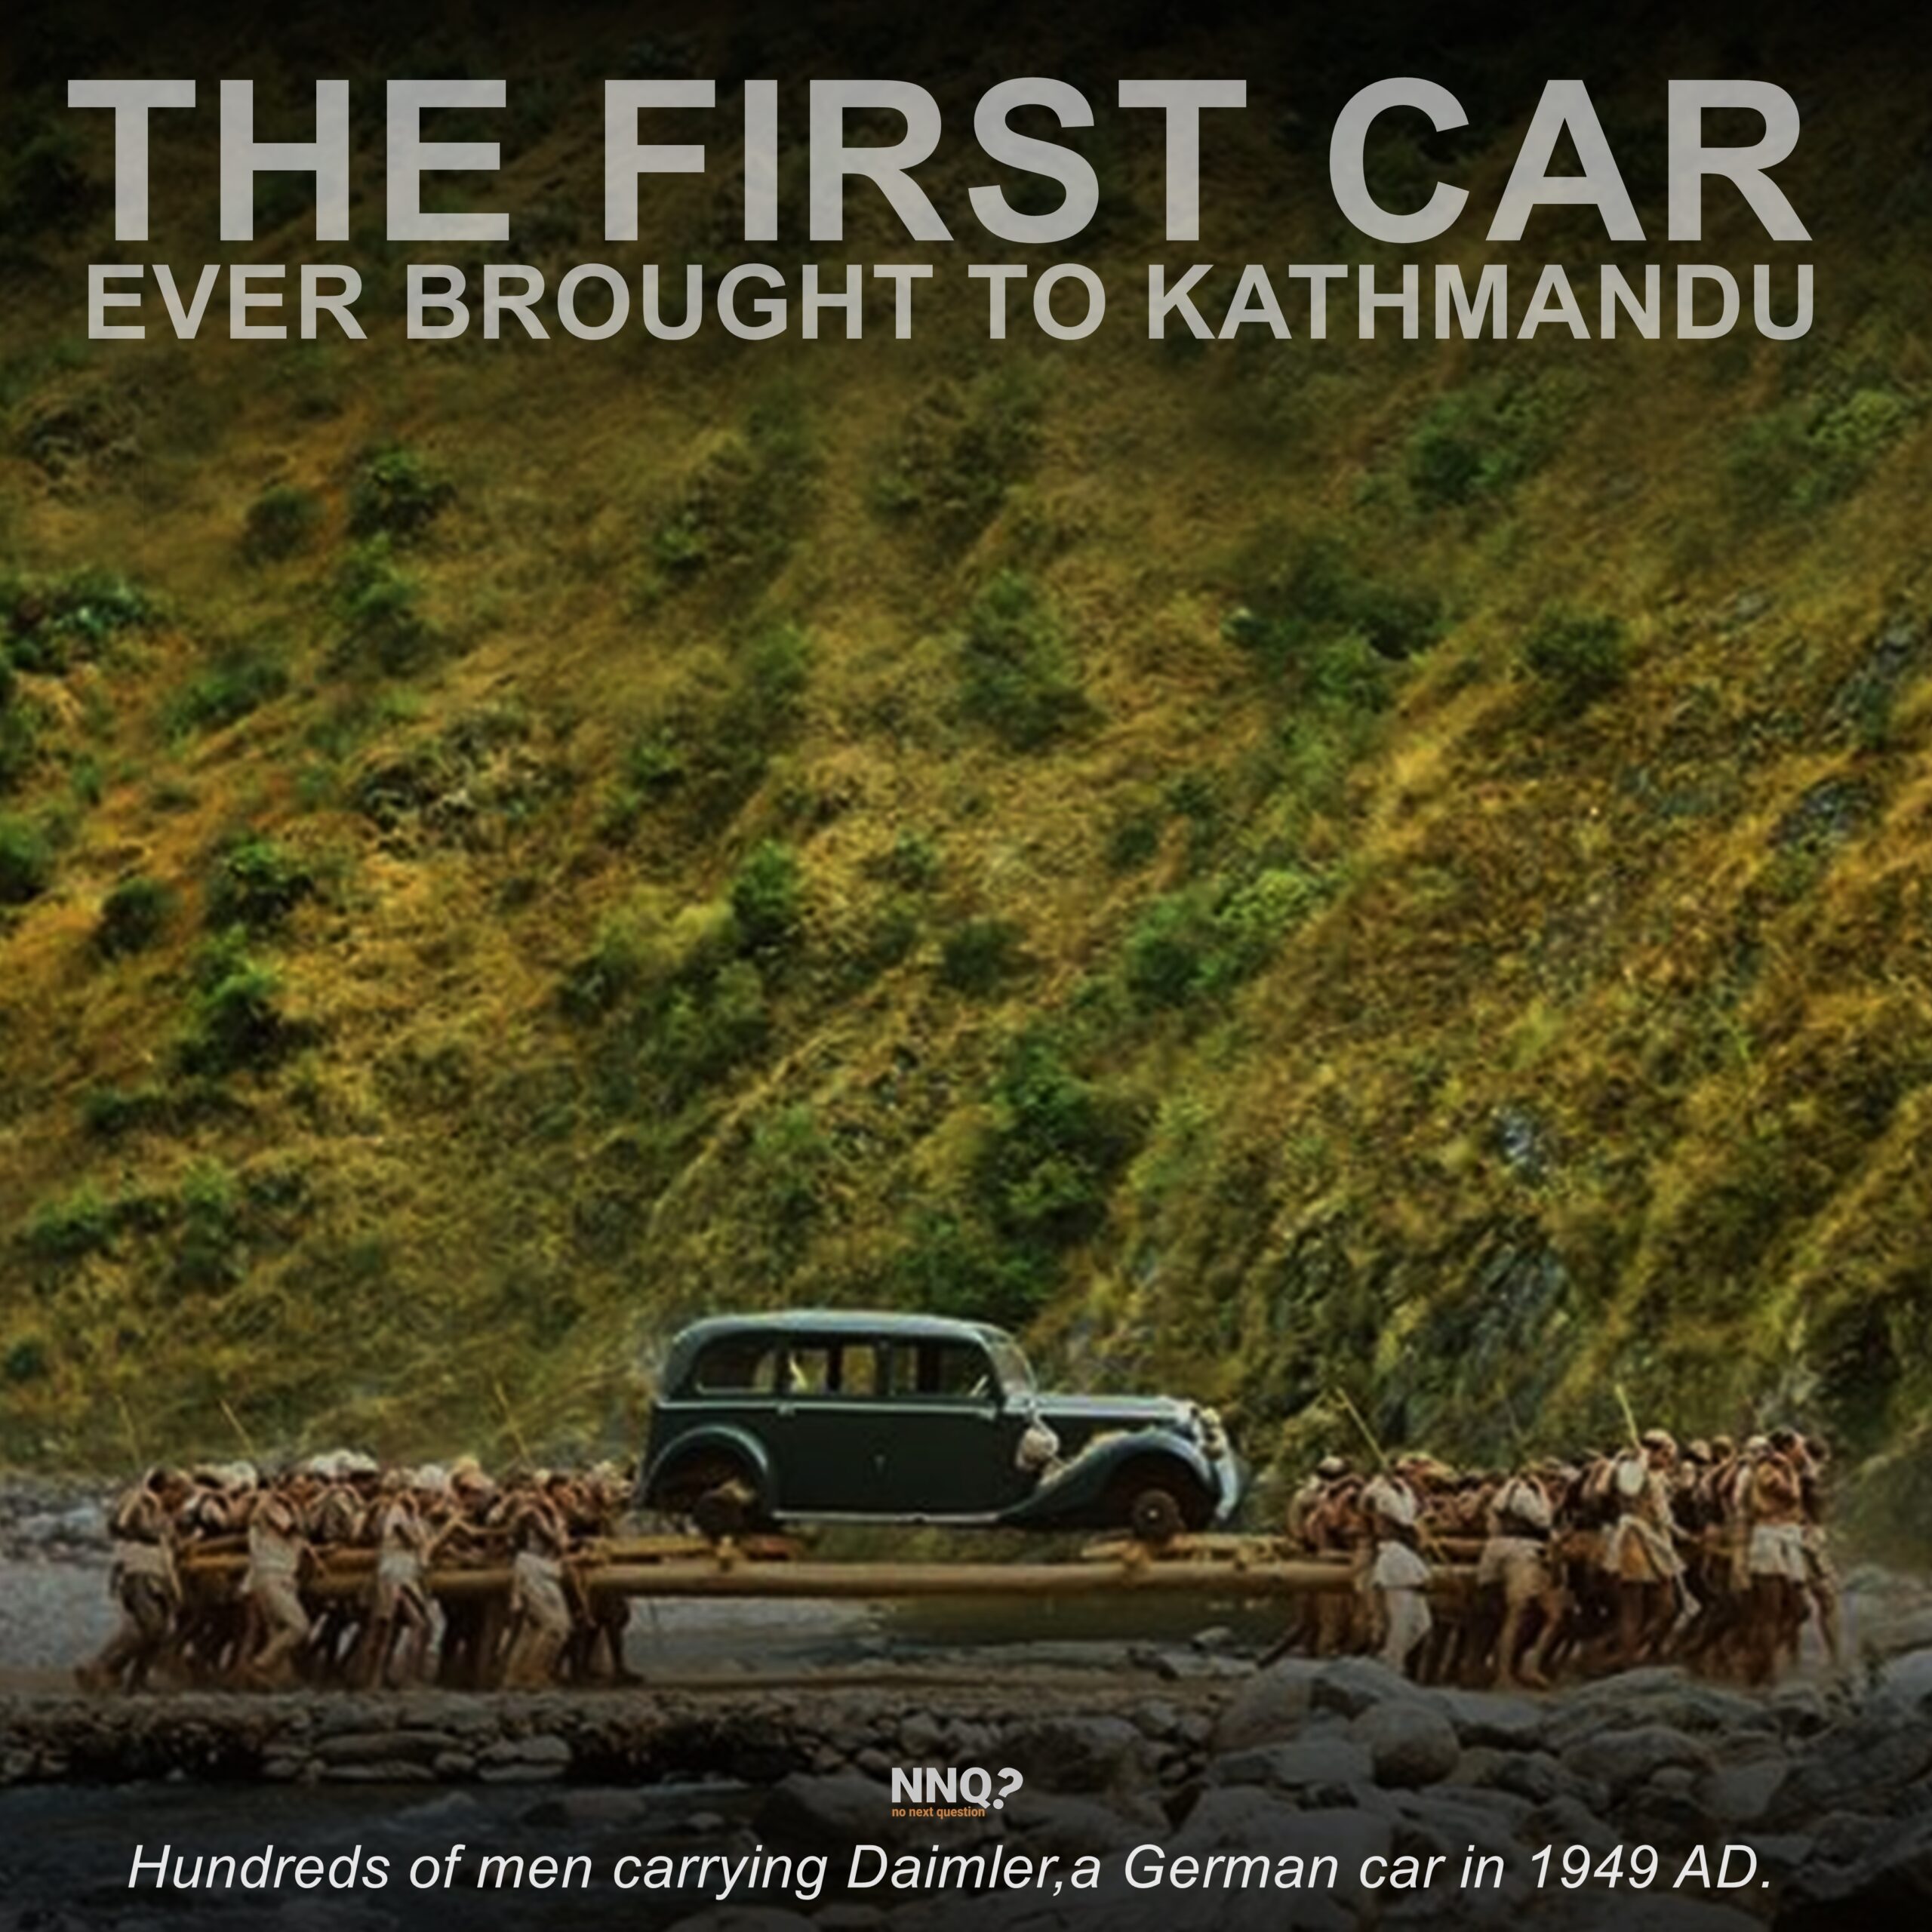 The first car ever brought to Kathmandu